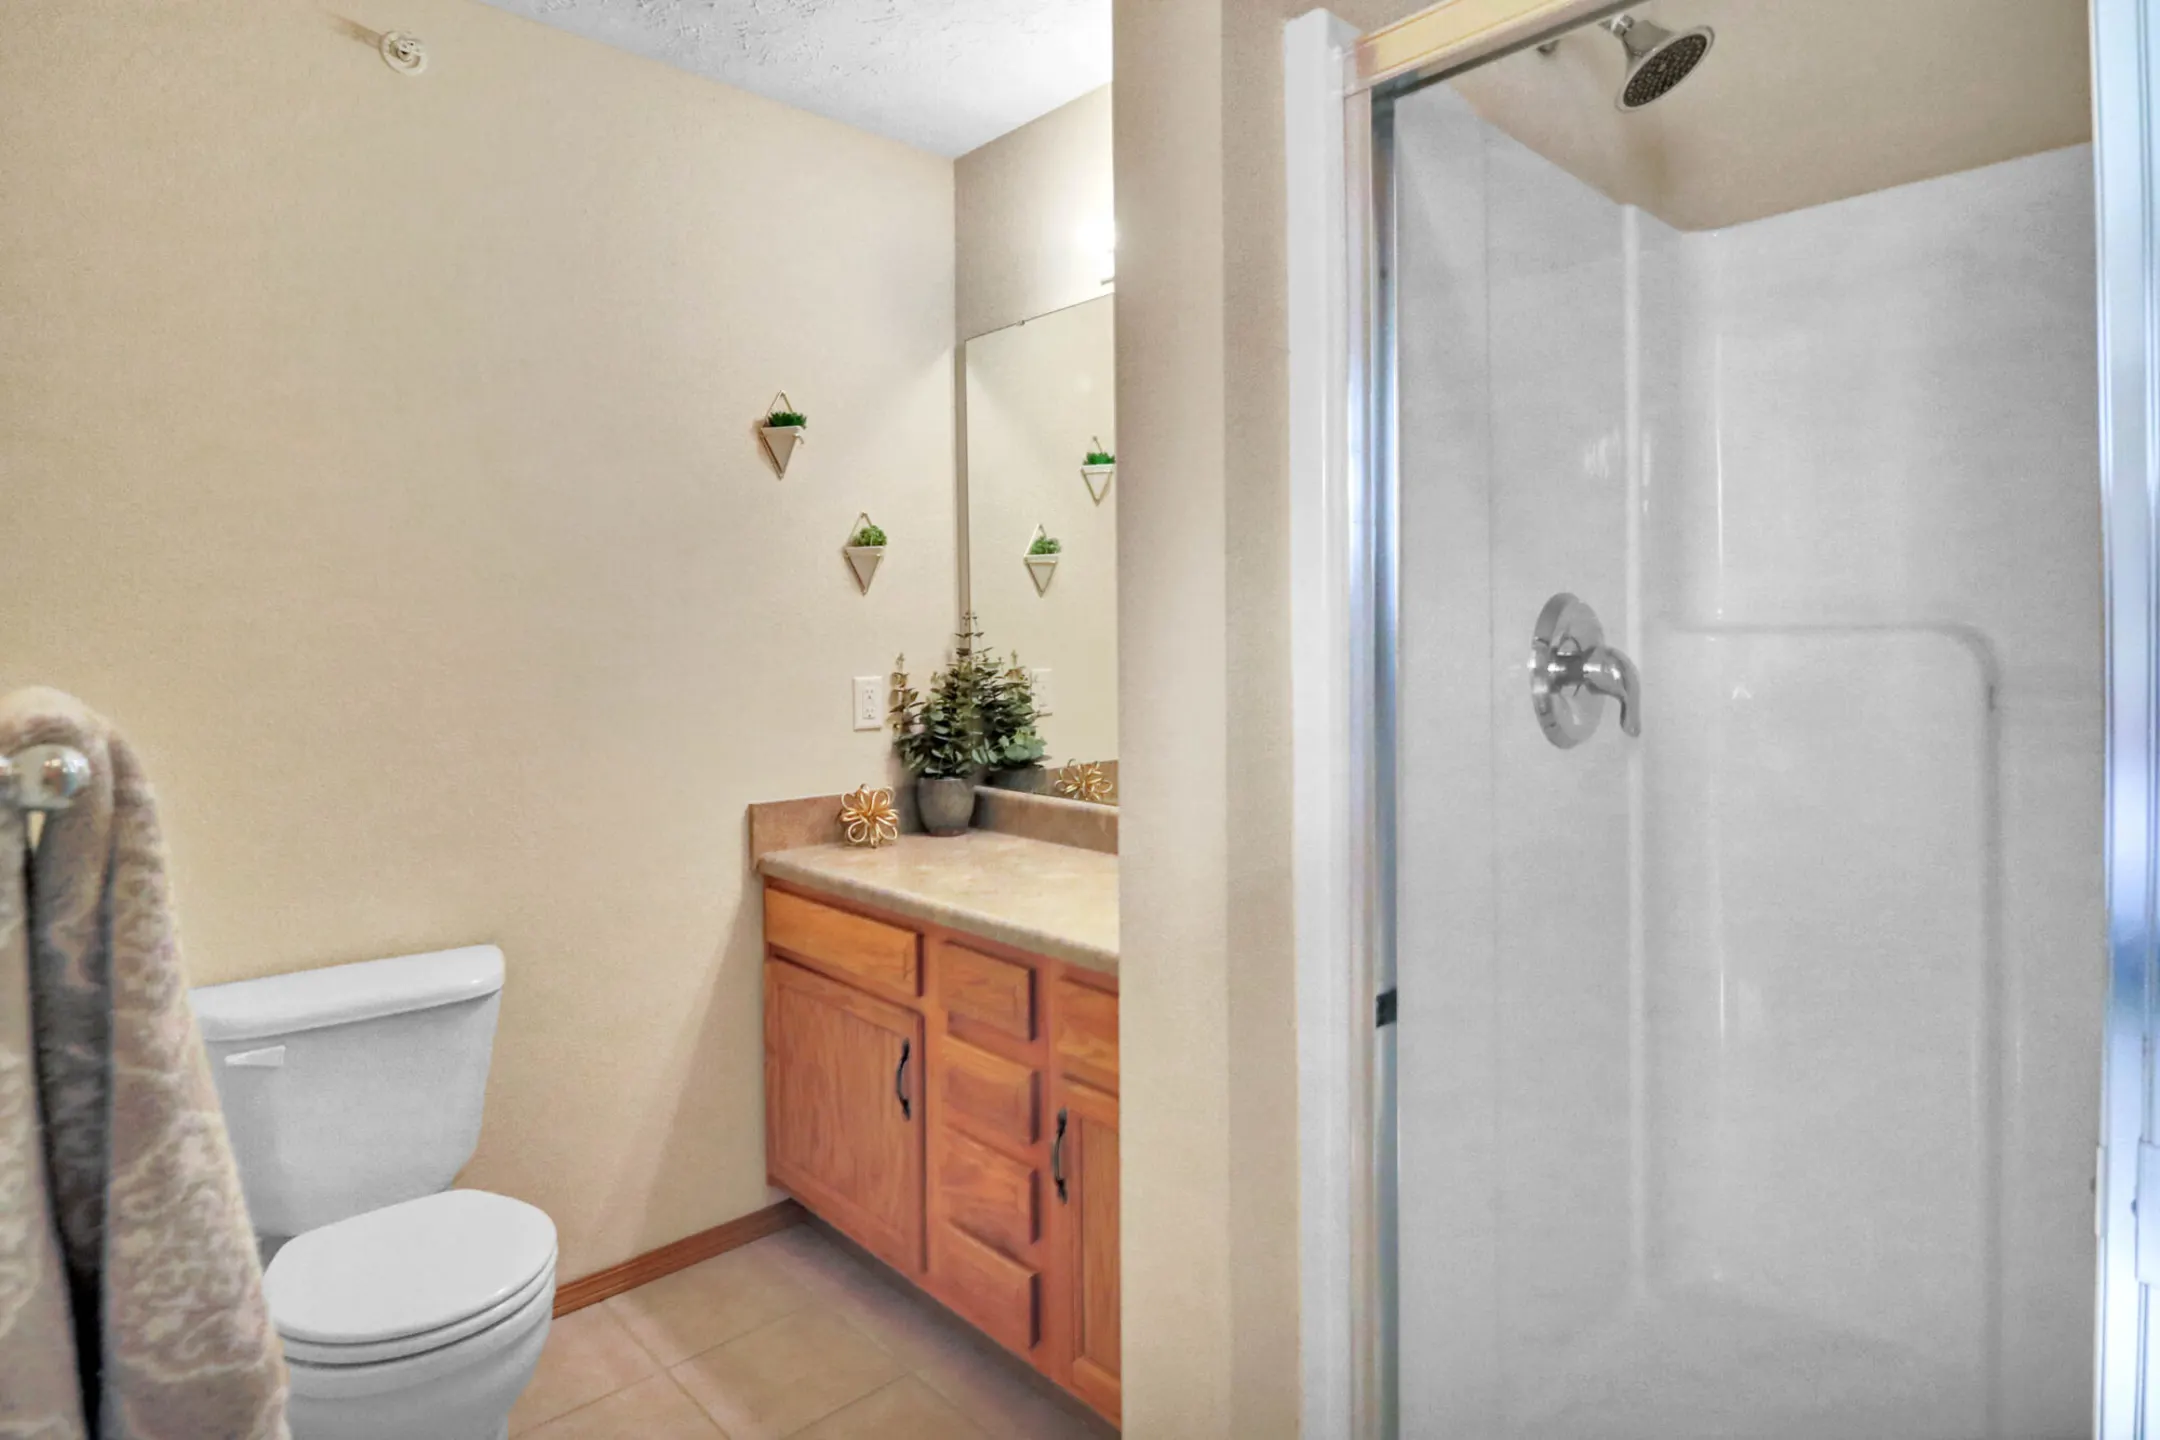 Bathroom - Old Stone Apartments - Republic, MO